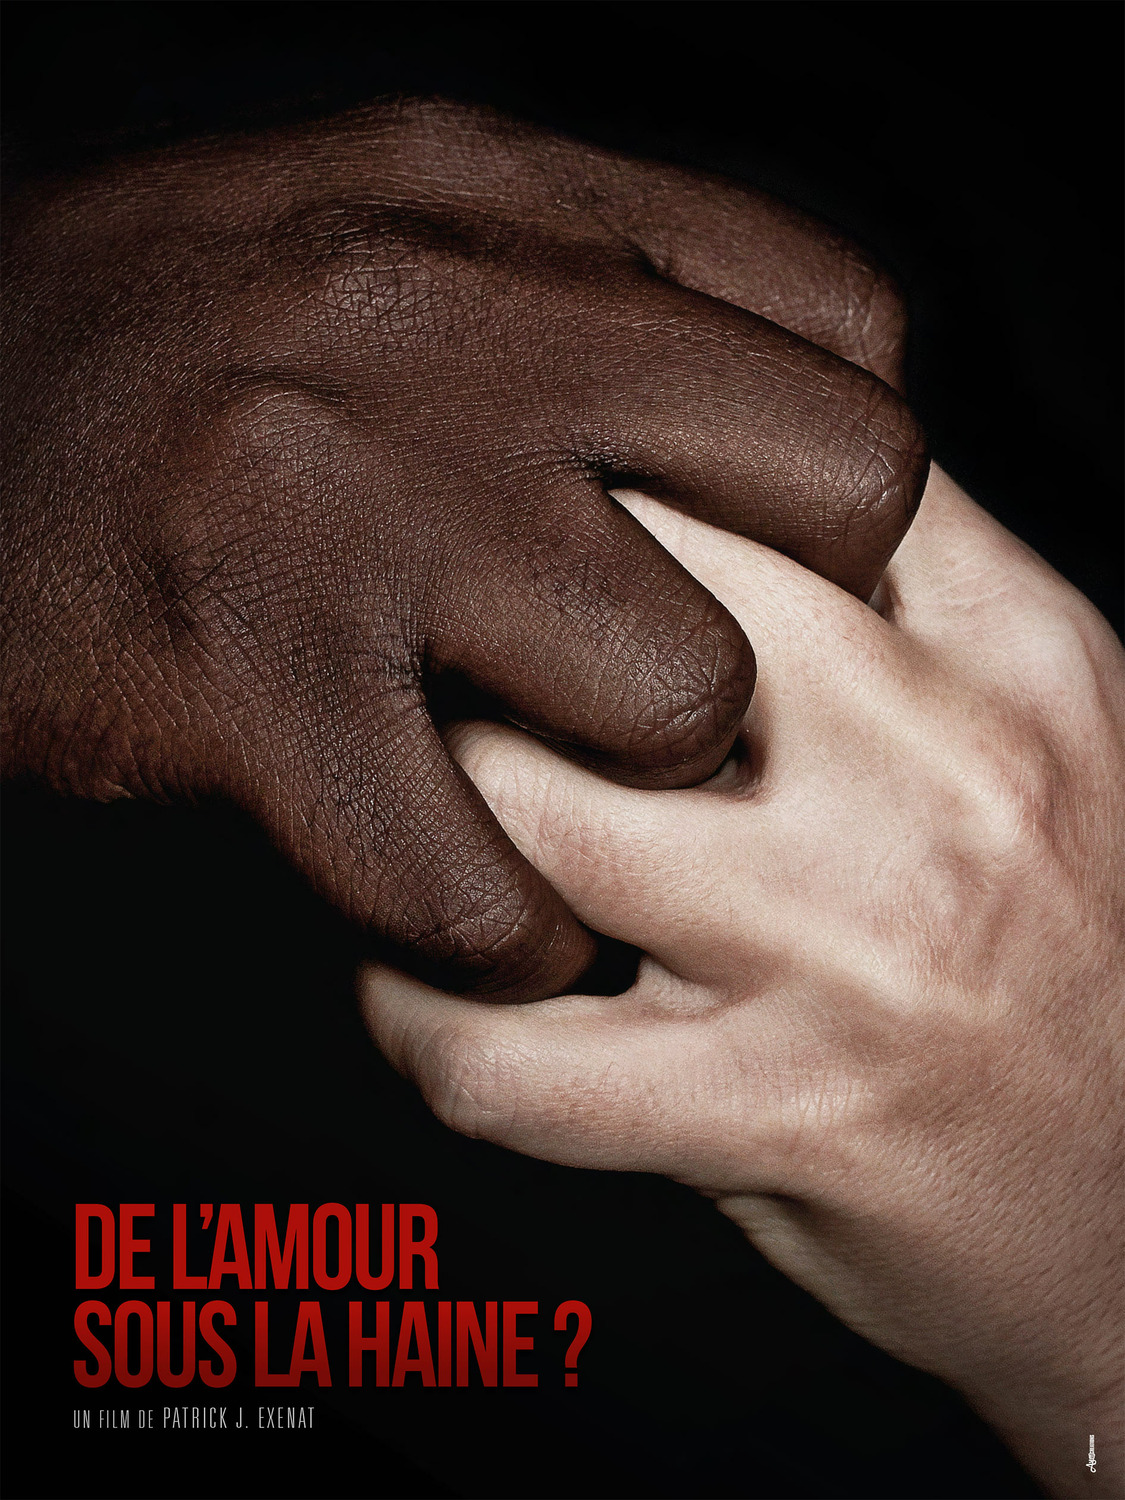 Extra Large Movie Poster Image for De l'amour sous la haine? (#1 of 2)